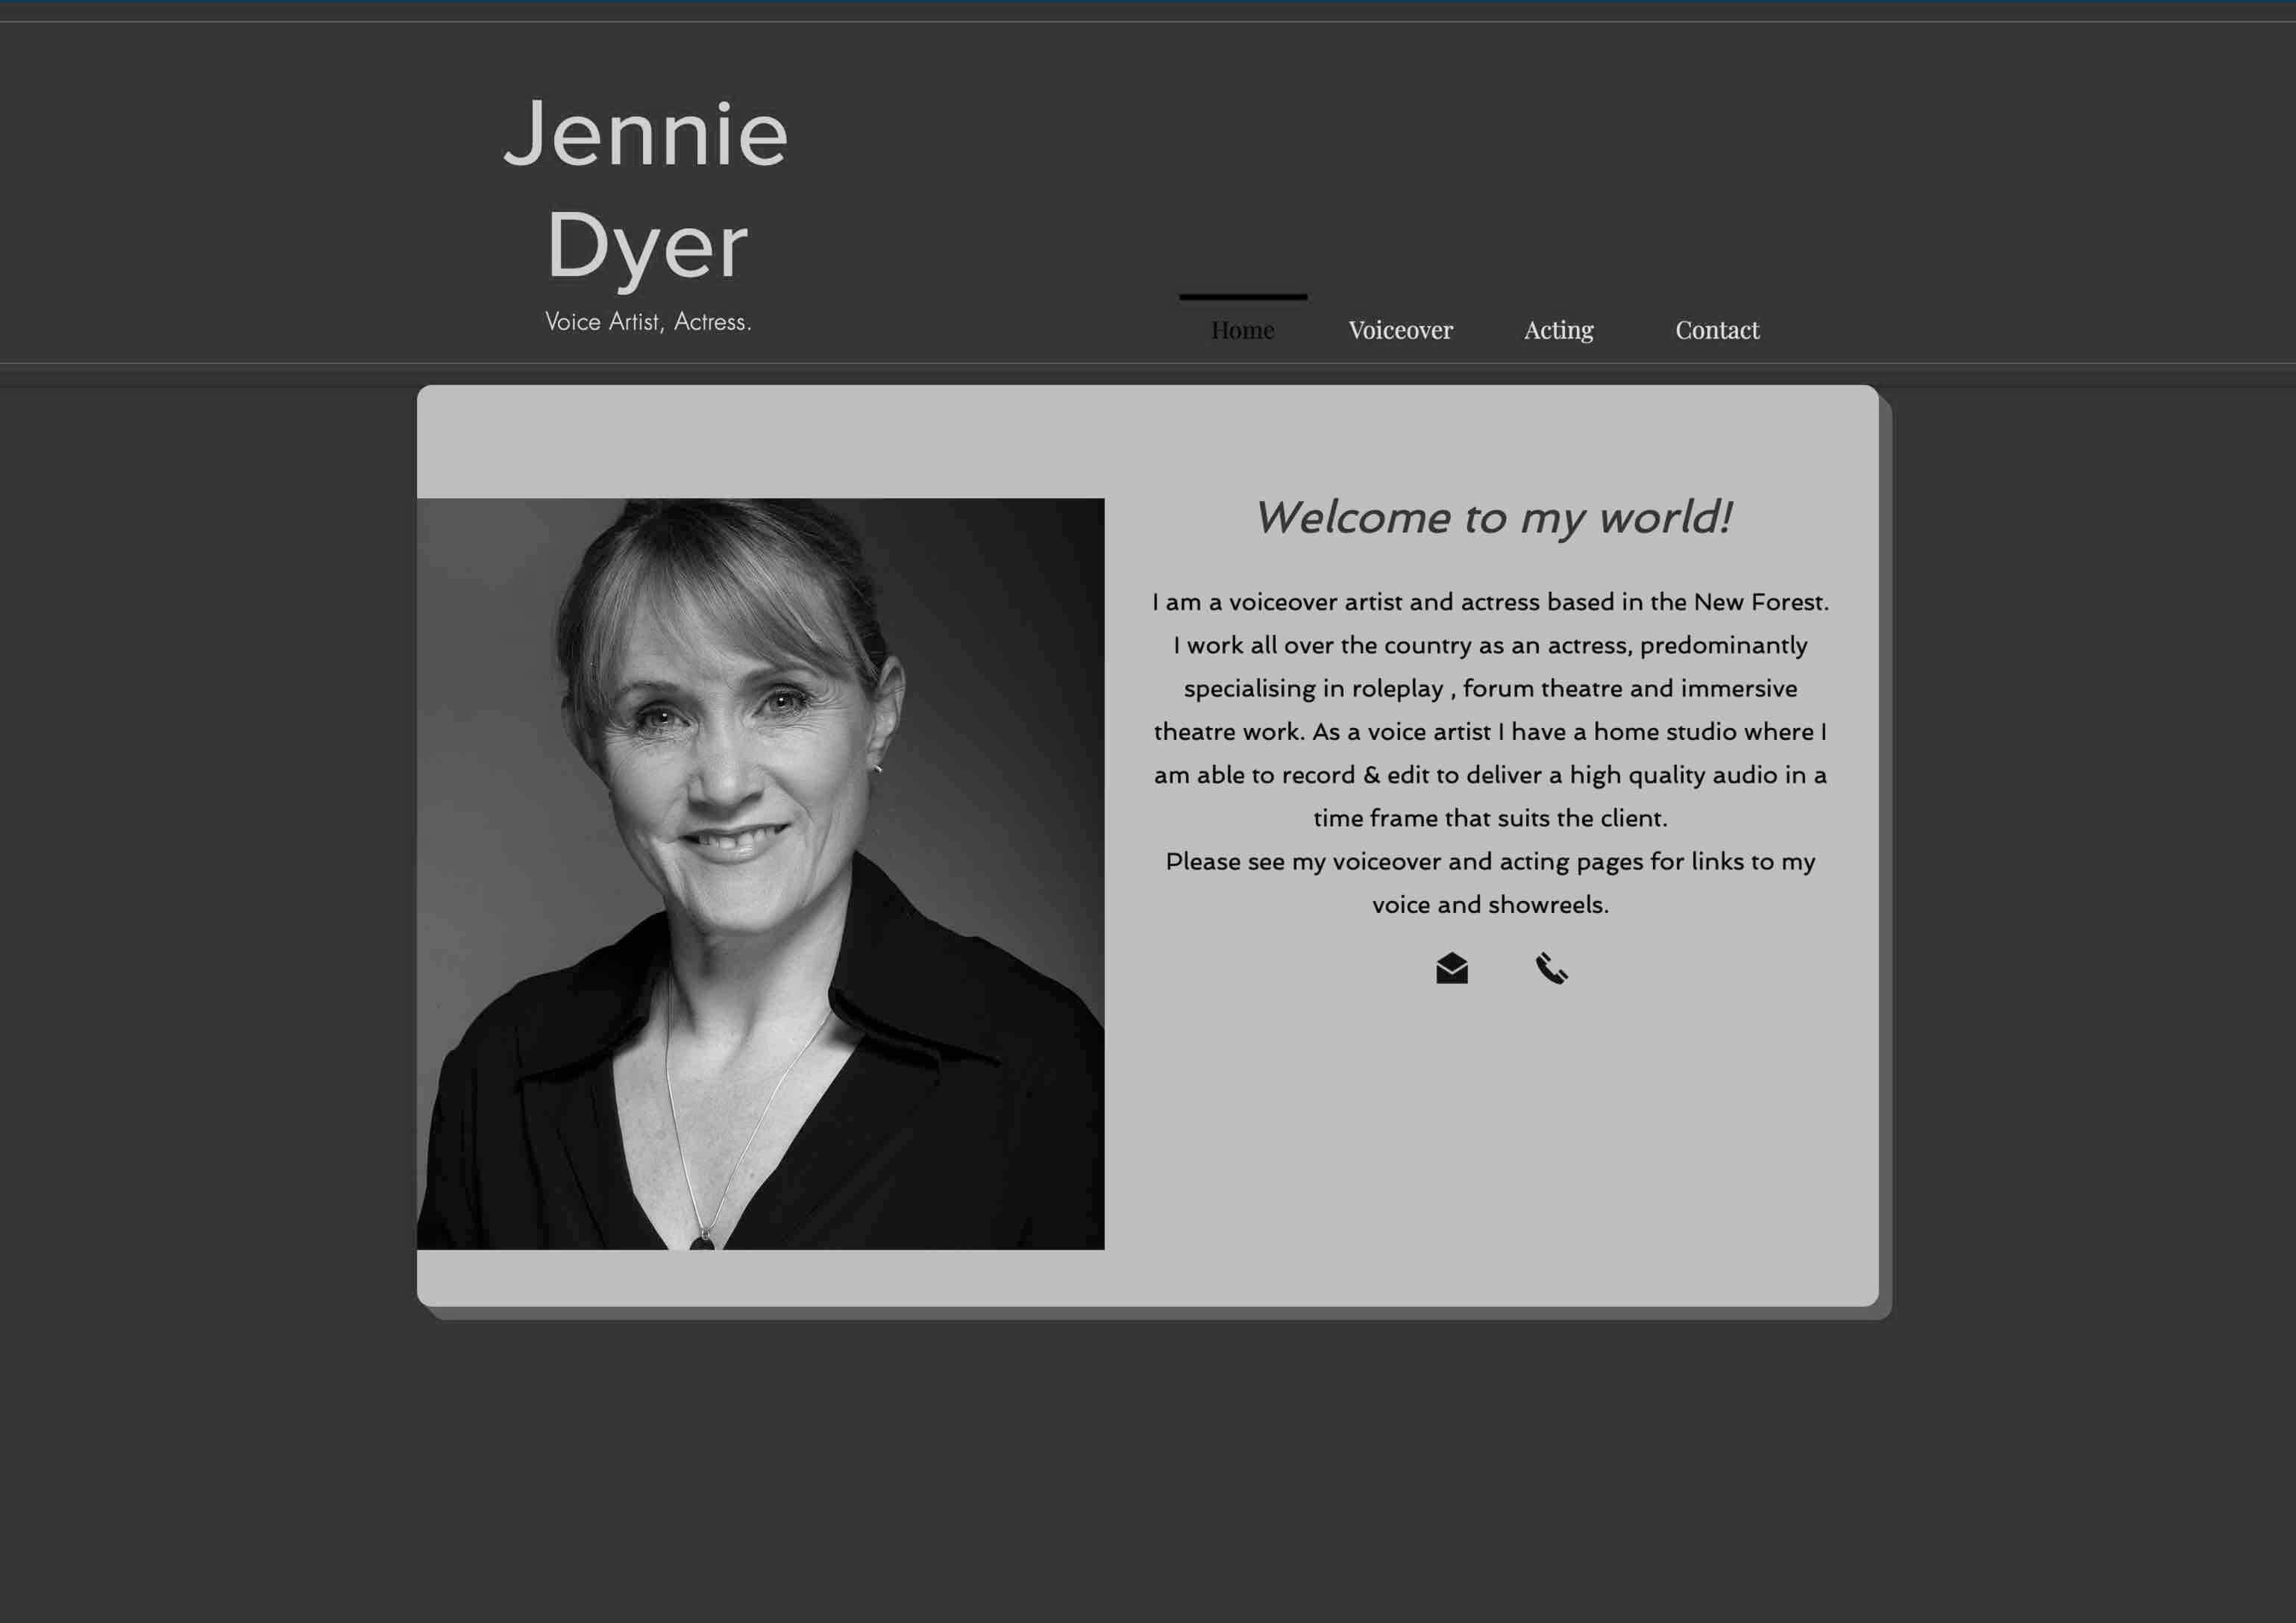 “Black and white” — Jennie’s site in gray tones